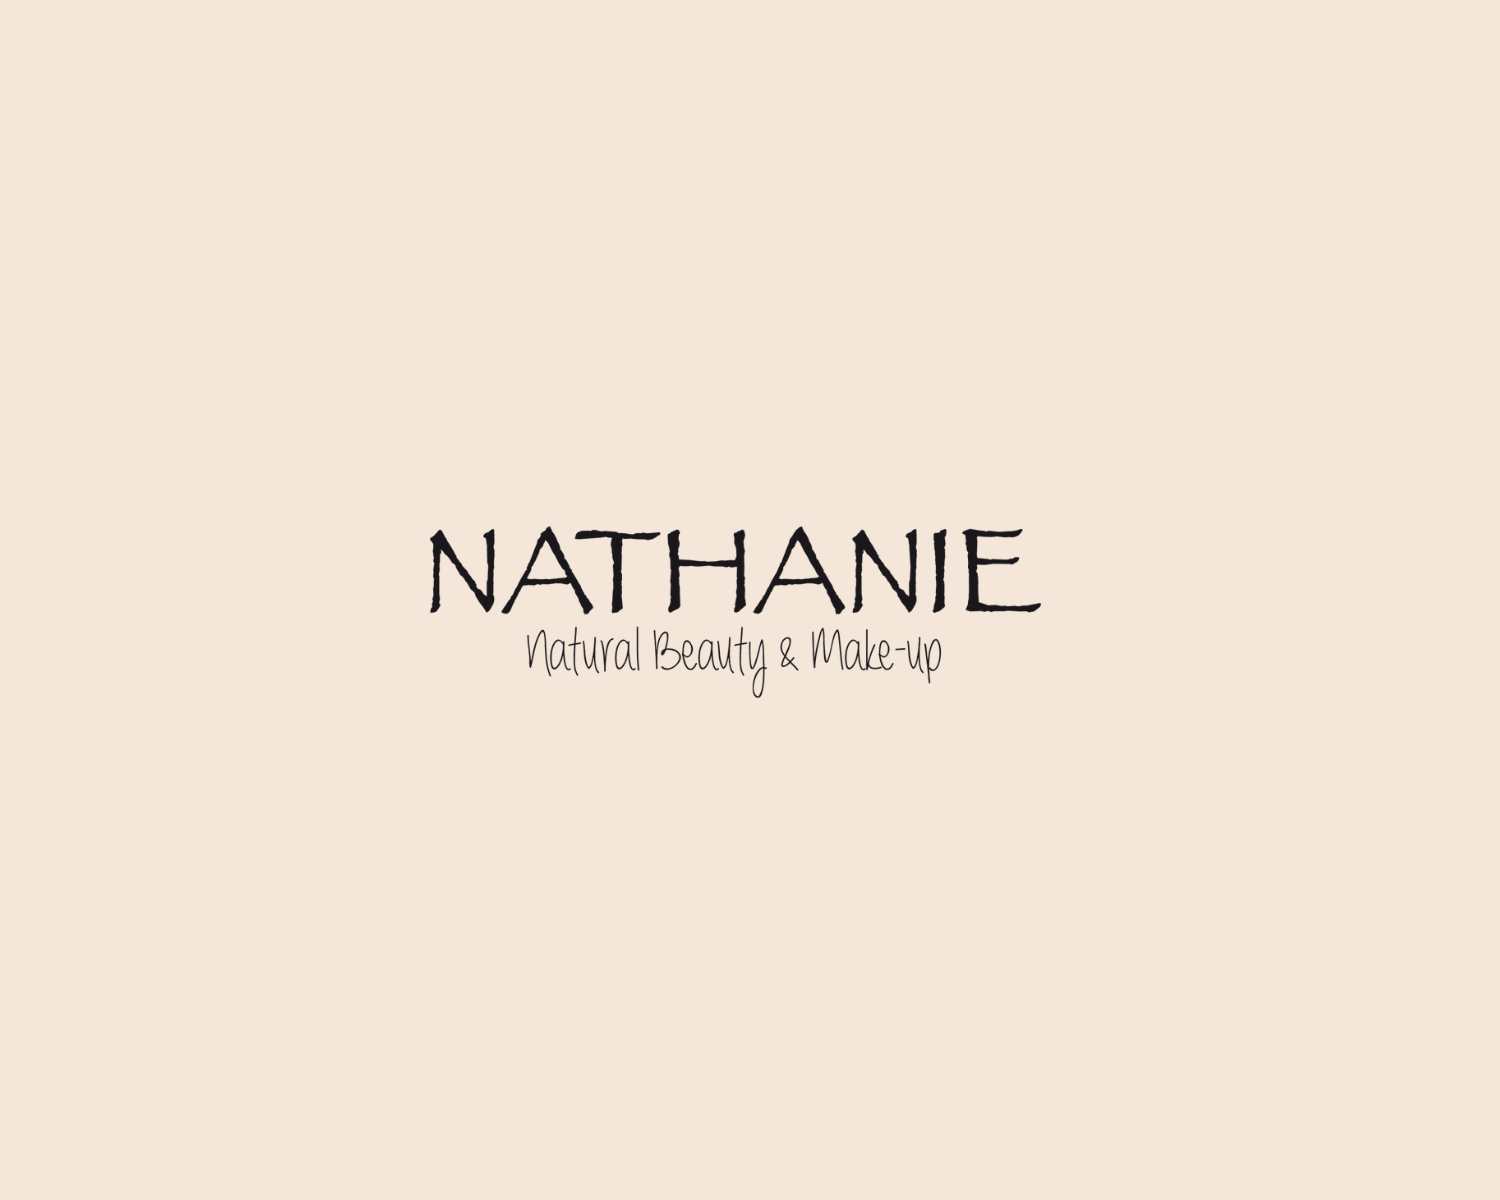 Nathanie